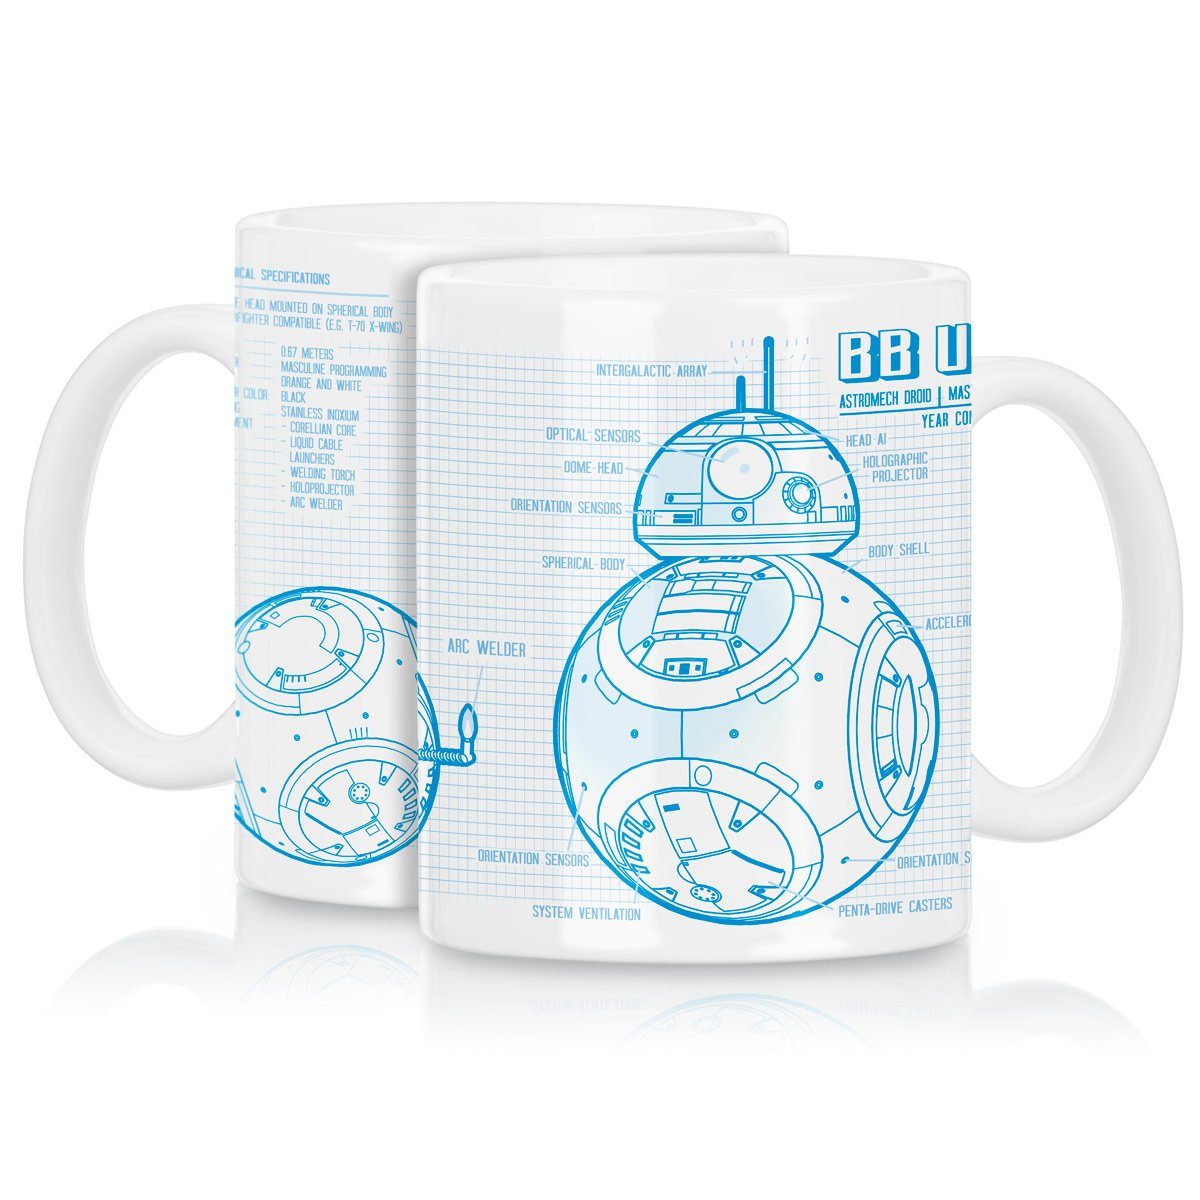 Keramik, krieg droide droide blaupause star BB-8 Tasse der roboter style3 sphero Tasse, kugel sterne Kaffeebecher wars